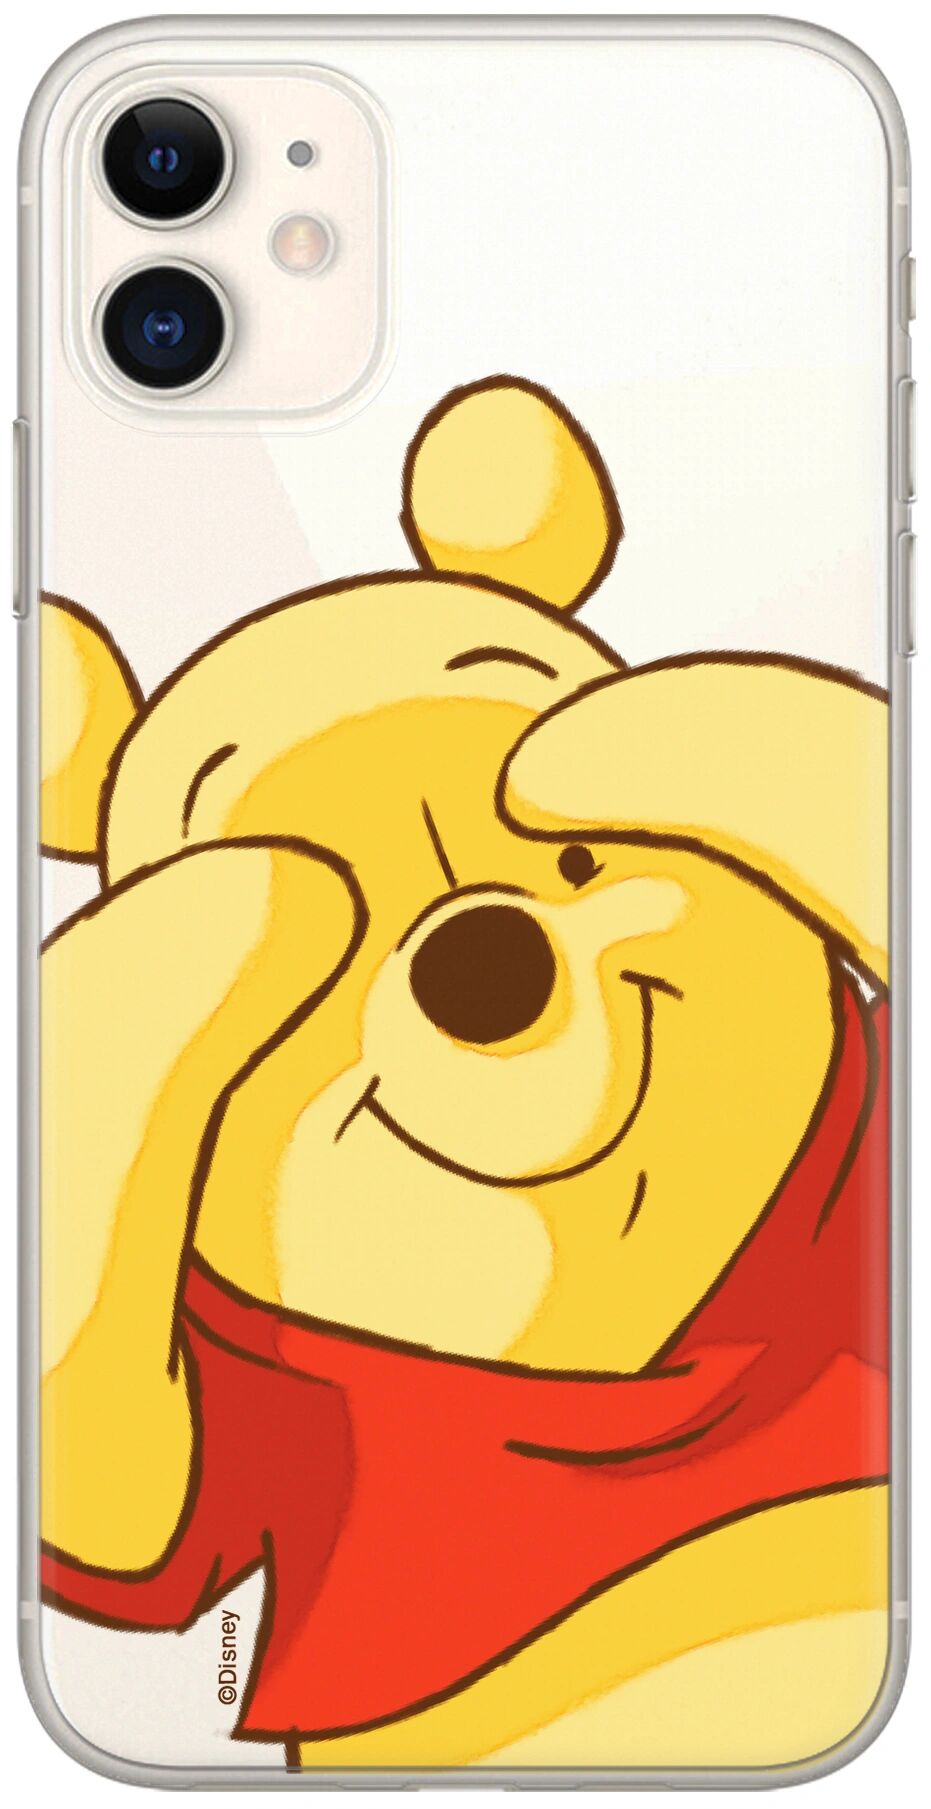 Ert Ochranný kryt pro iPhone 7 PLUS / 8 PLUS - Winnie the Pooh 033